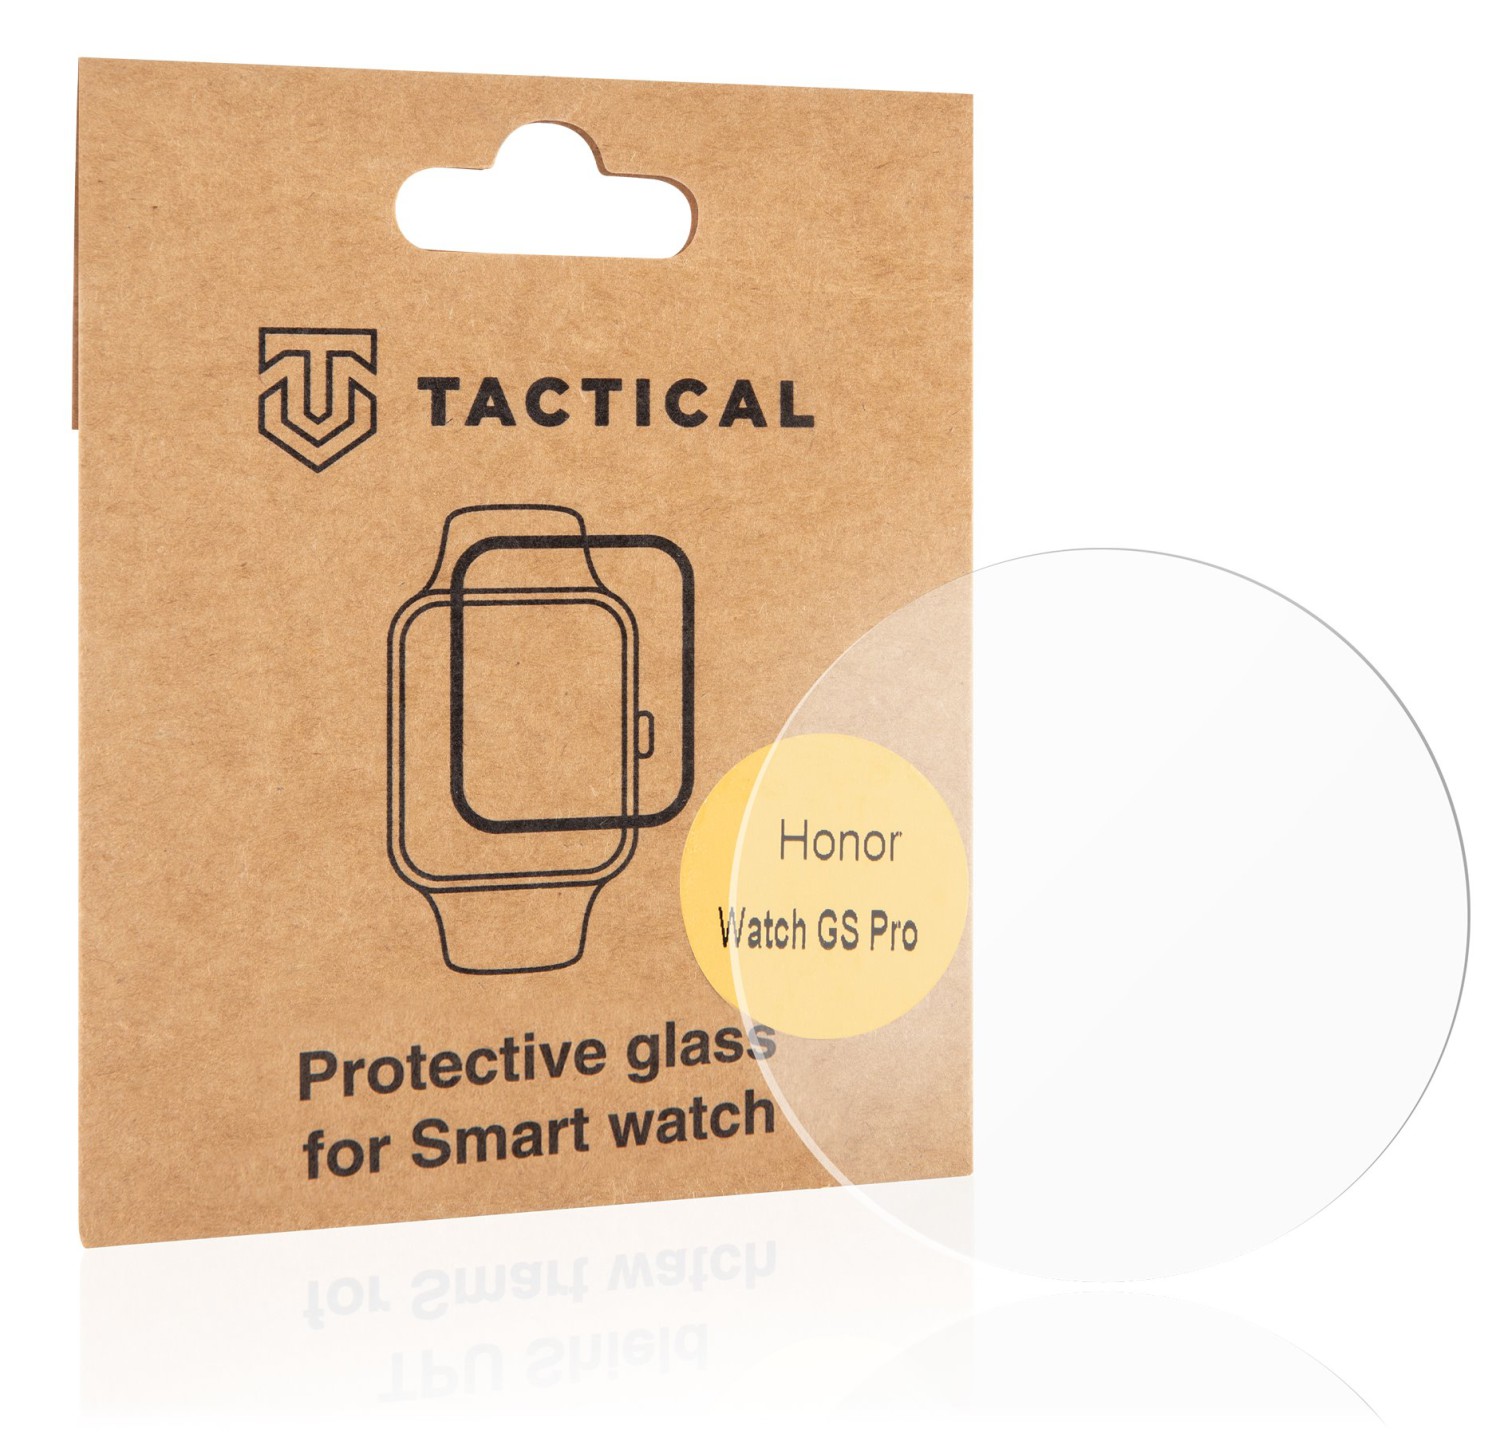 Ochranné sklo Tactical Glass Shield pro Honor Watch GS Pro